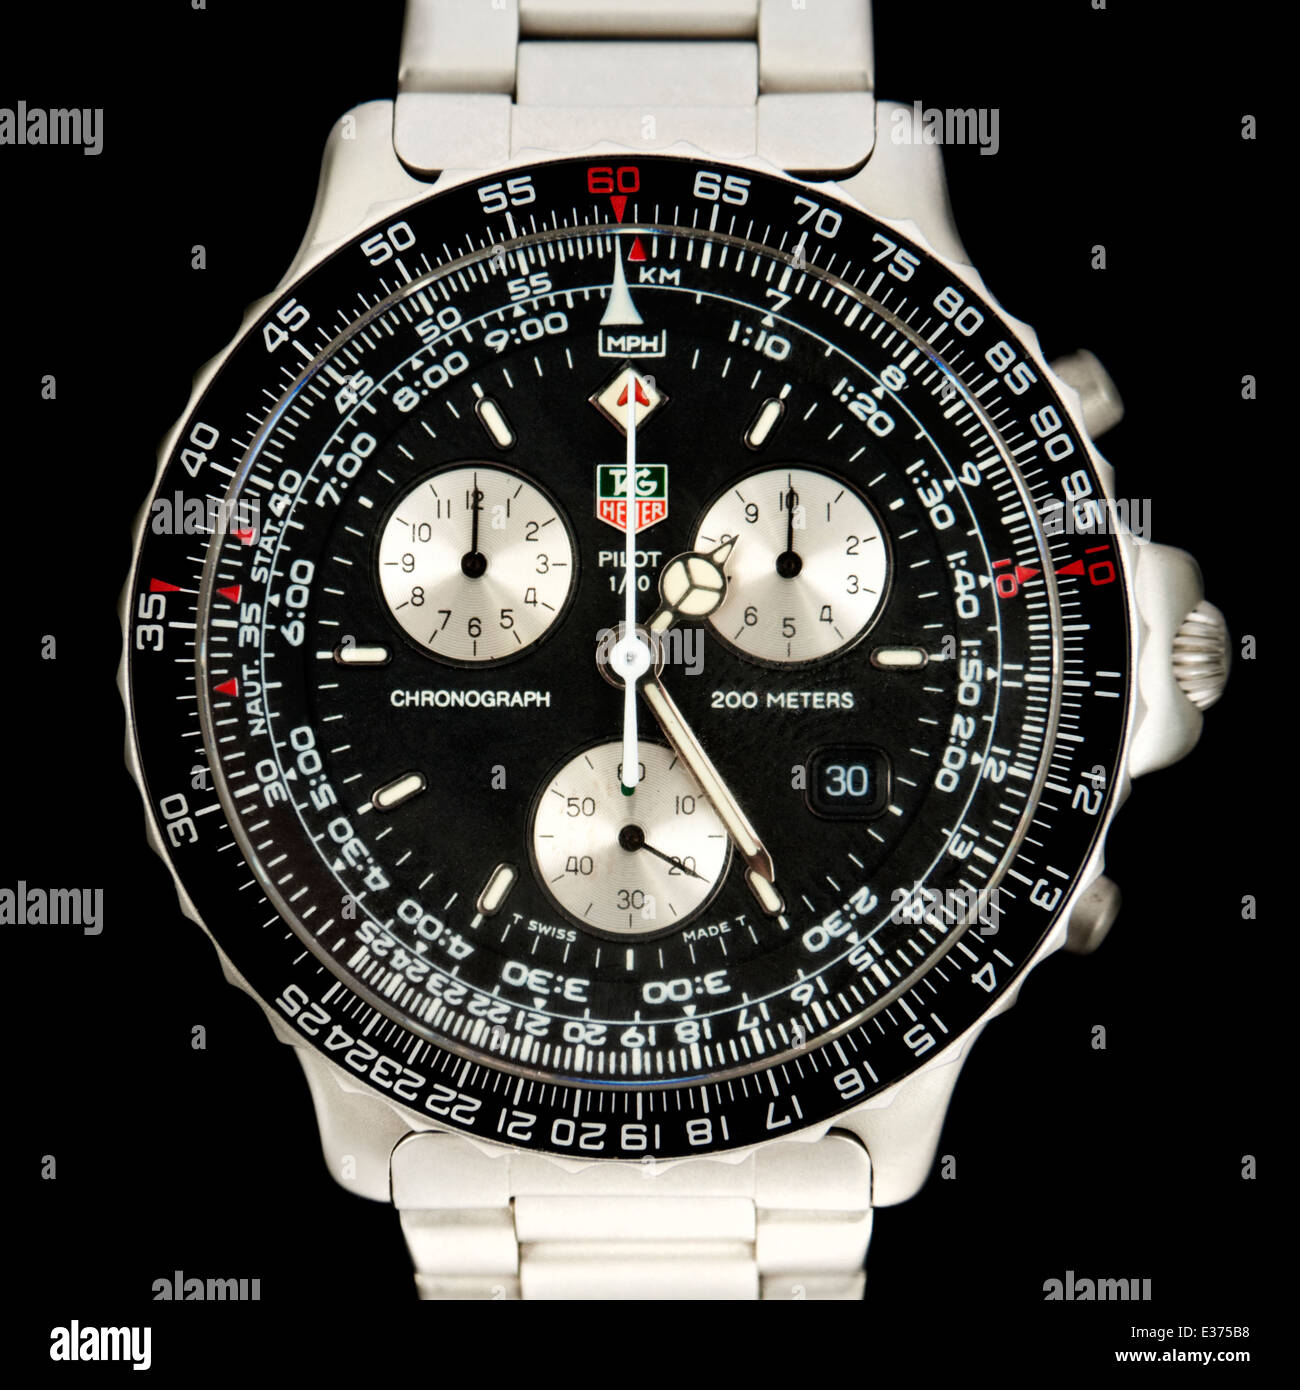 1990er Jahre Tag Heuer Pilot 1/10 Chronograph Herren Armbanduhr (Modell  530-306 Stockfotografie - Alamy